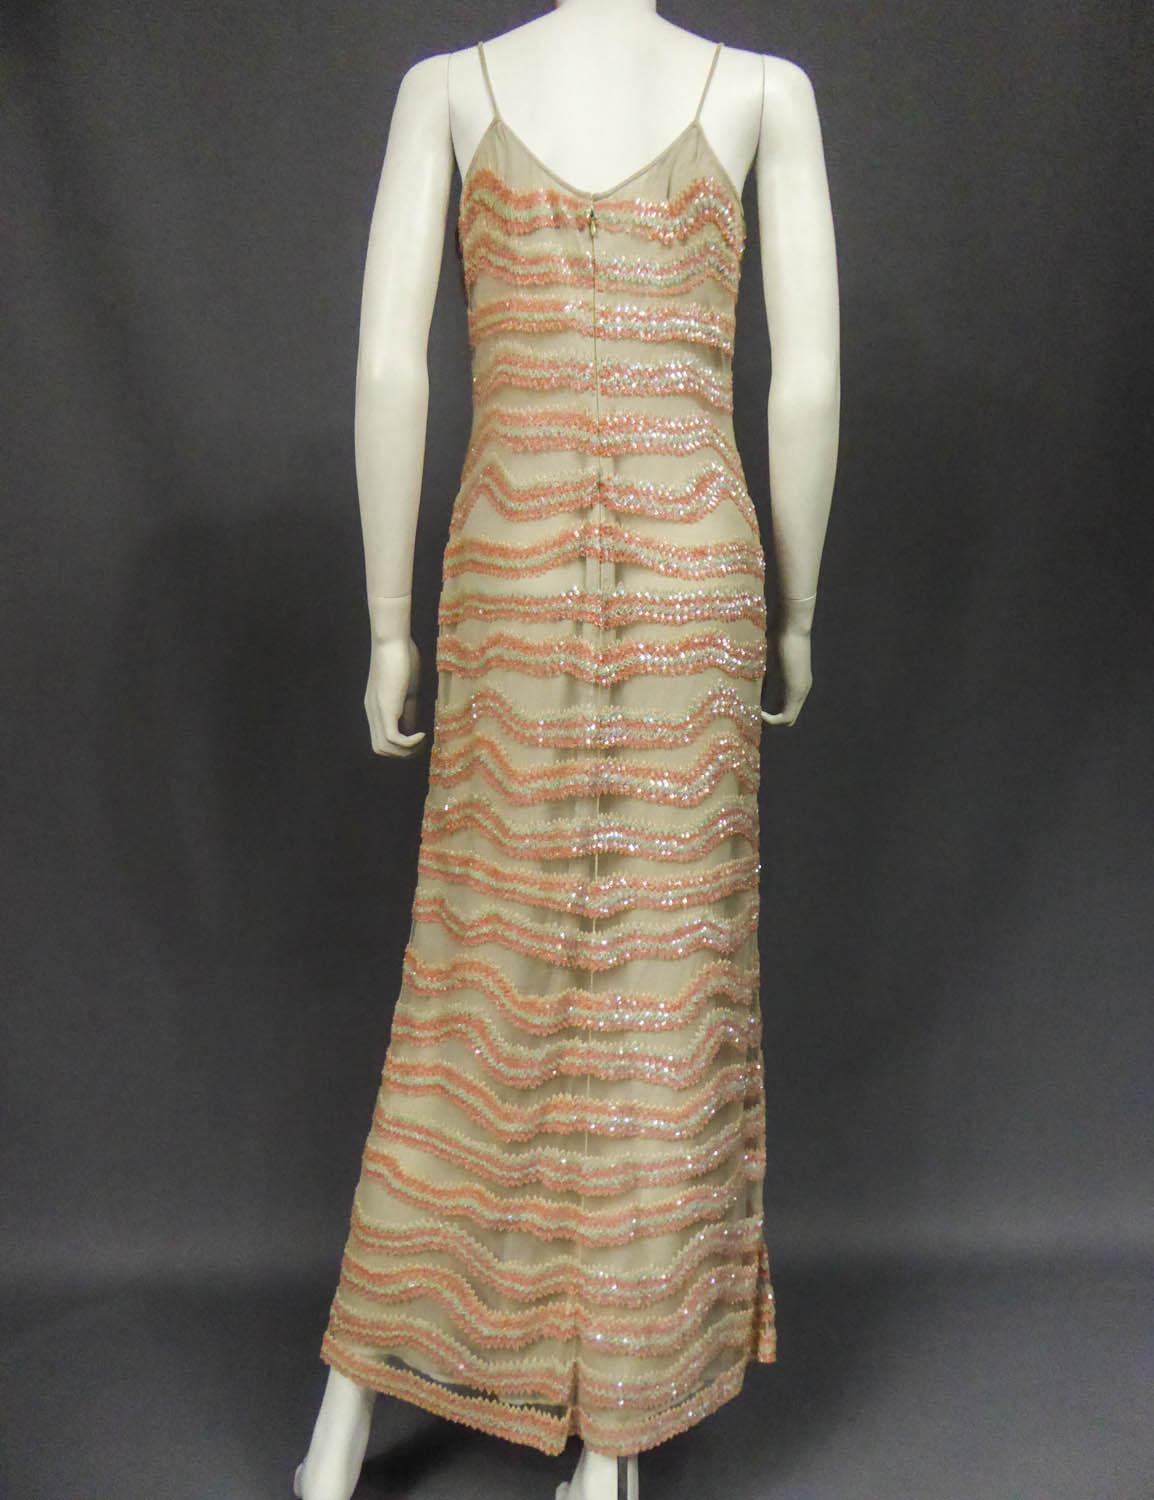 Giorgio Armani Couture fashion show dress worn by Claudia Cardinale - Circa 2000 For Sale 3